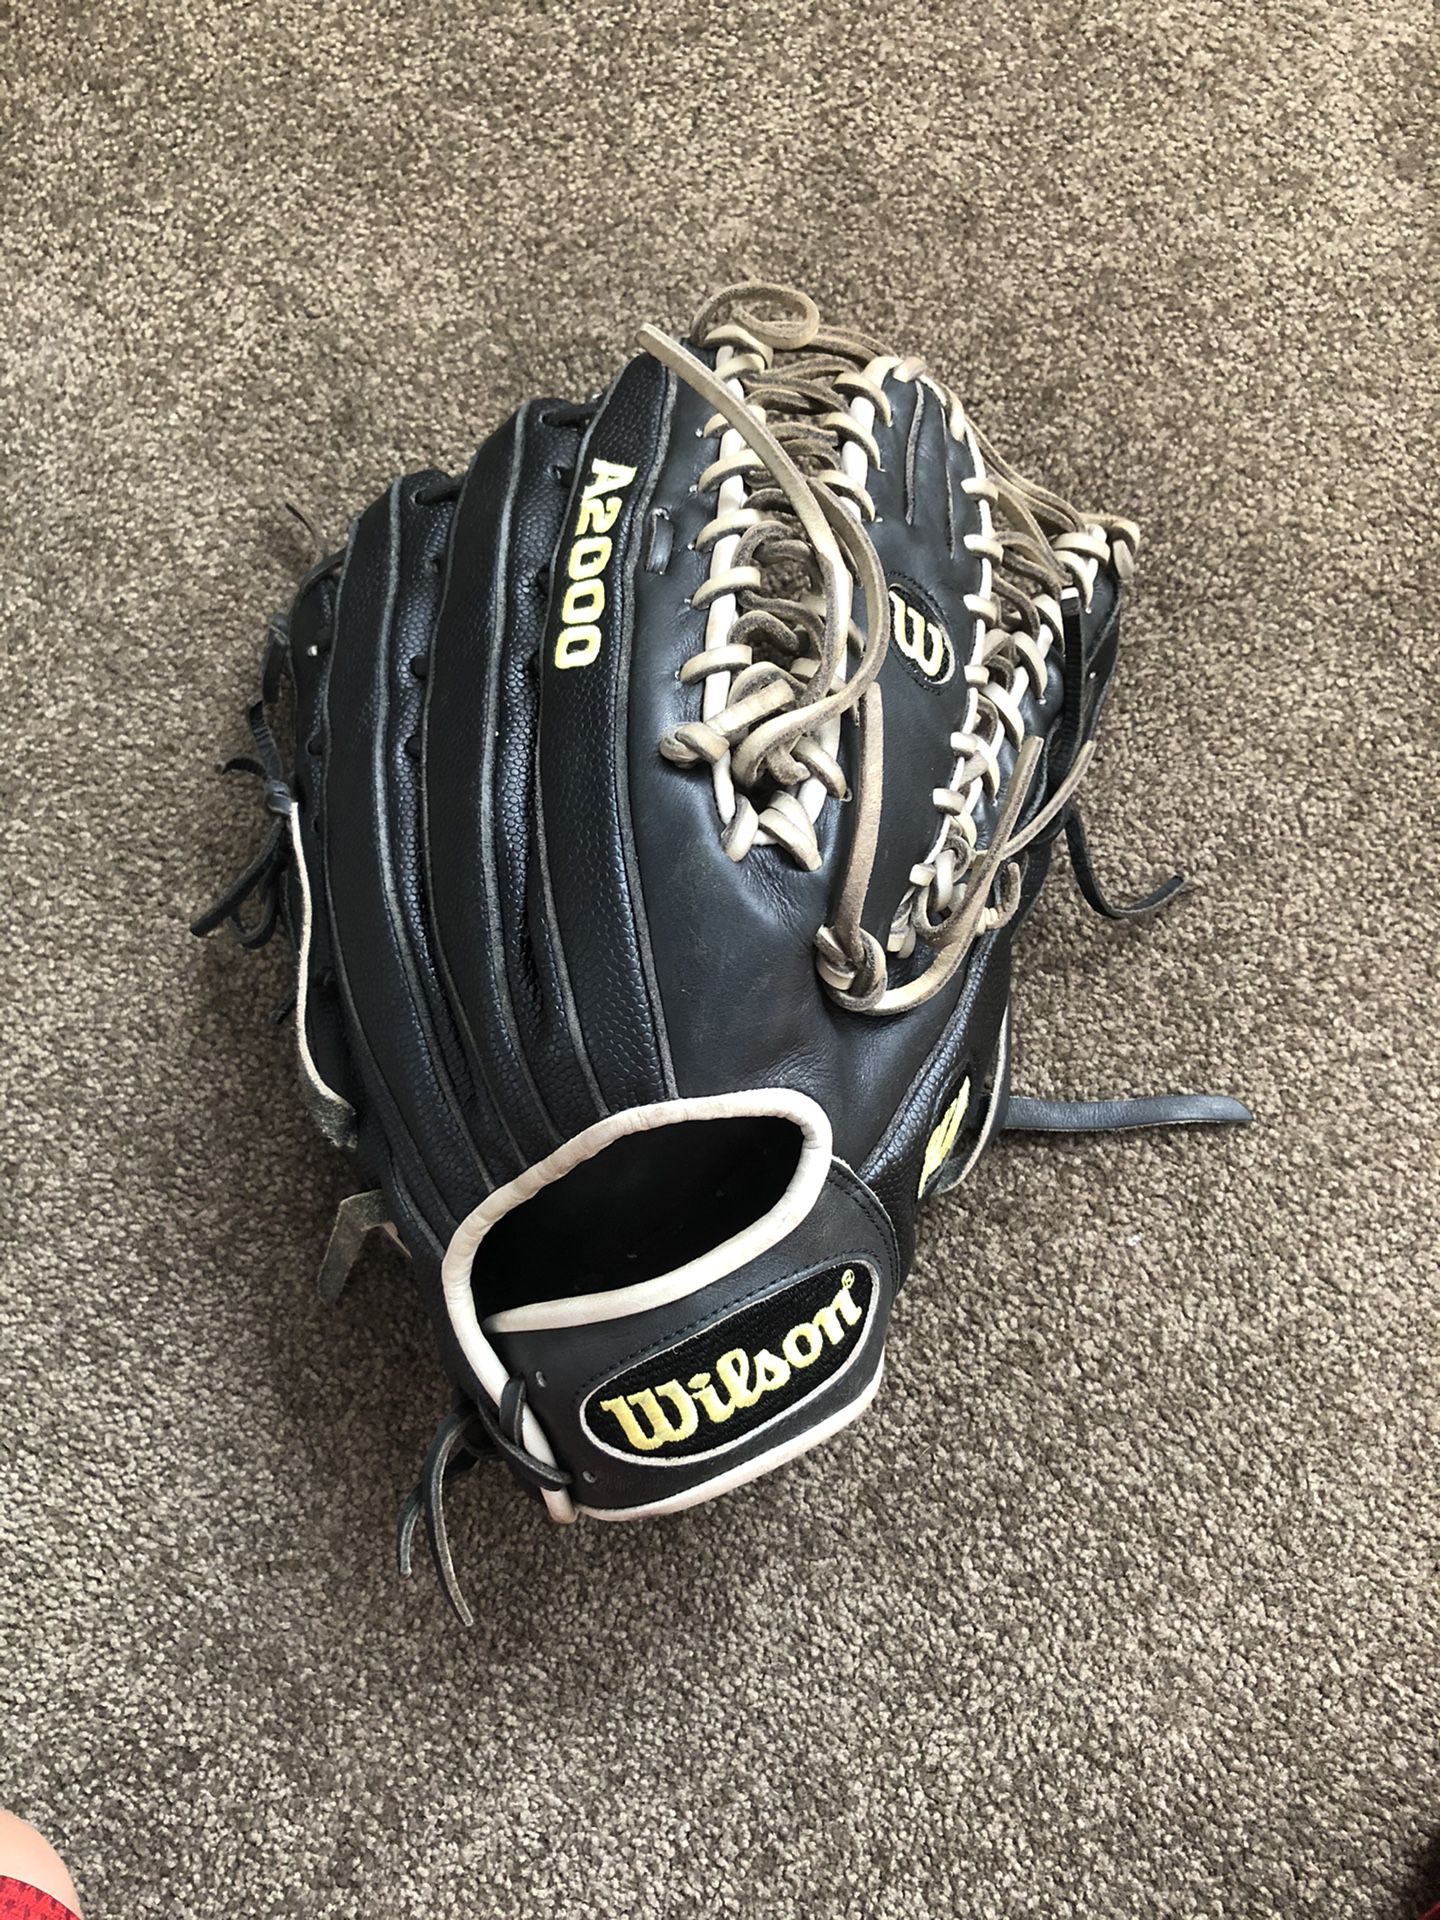 Black/Grey Wilson A2000 12 3/4 Baseball/Softball Glove